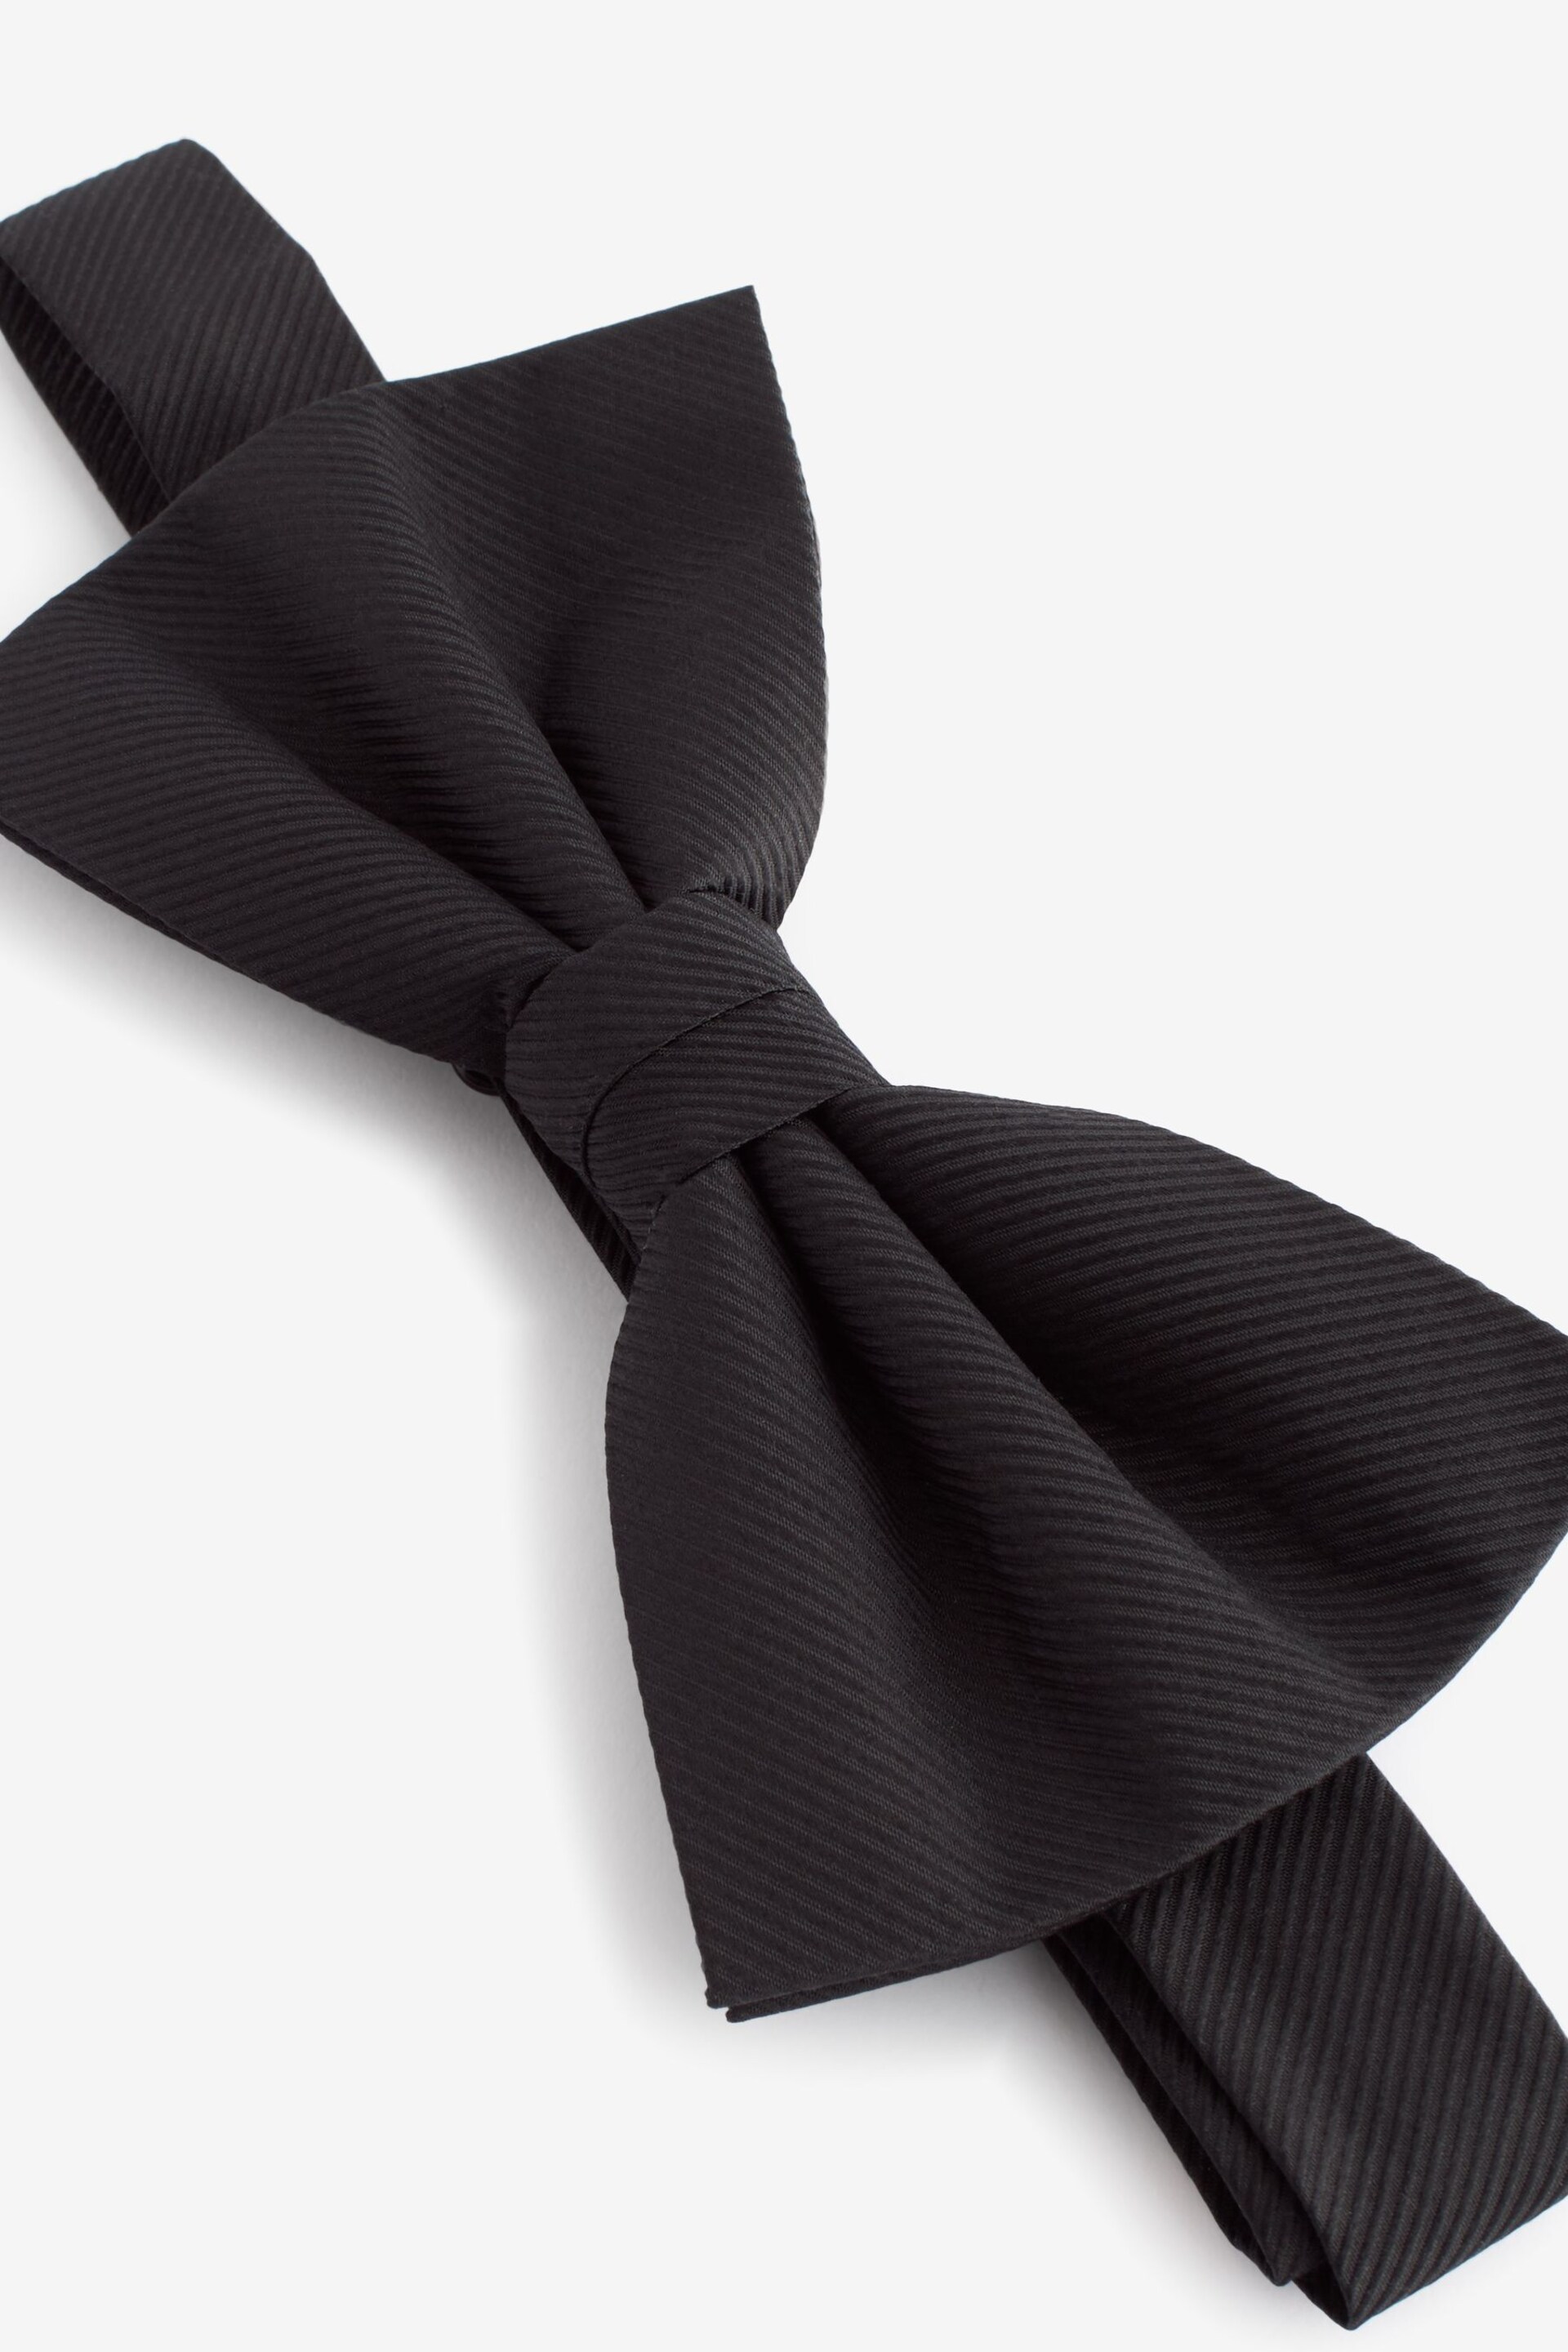 Black Twill Silk Bow Tie - Image 2 of 3